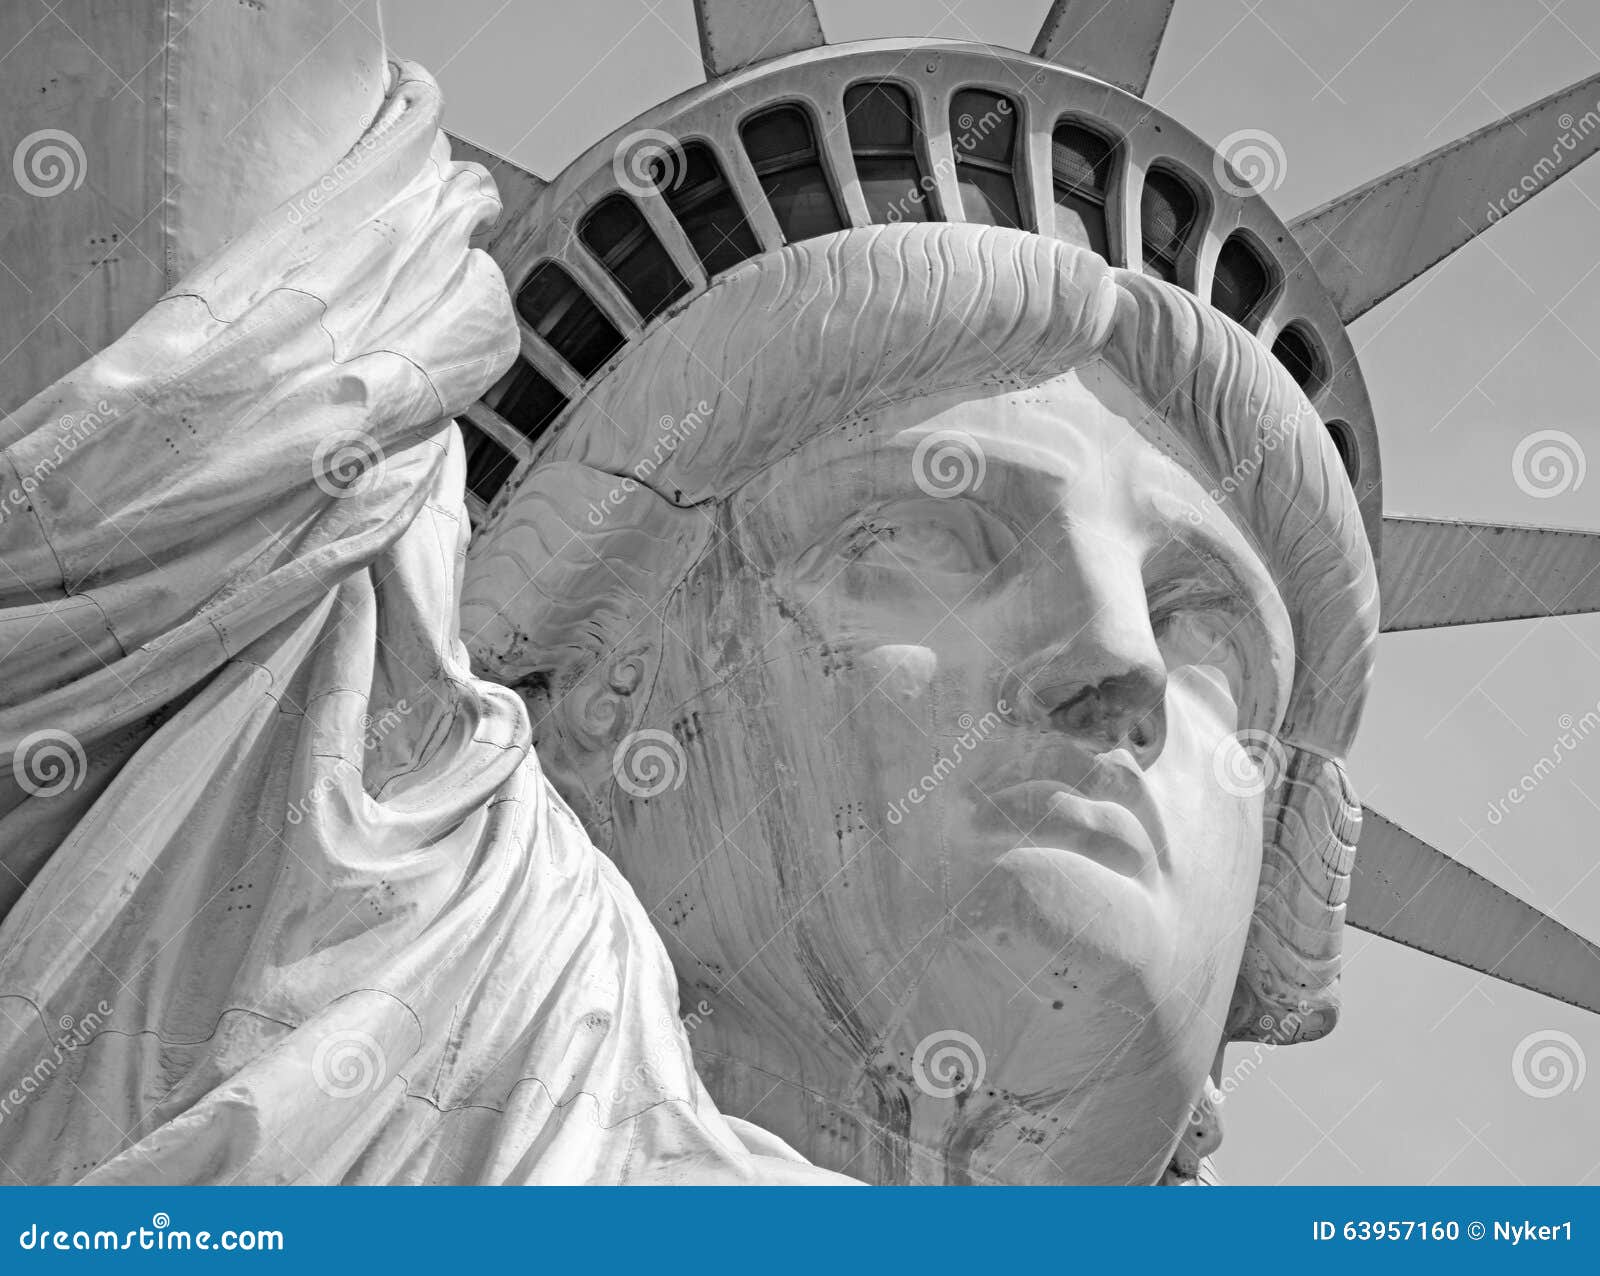 statue of liberty, liberty island, new york city